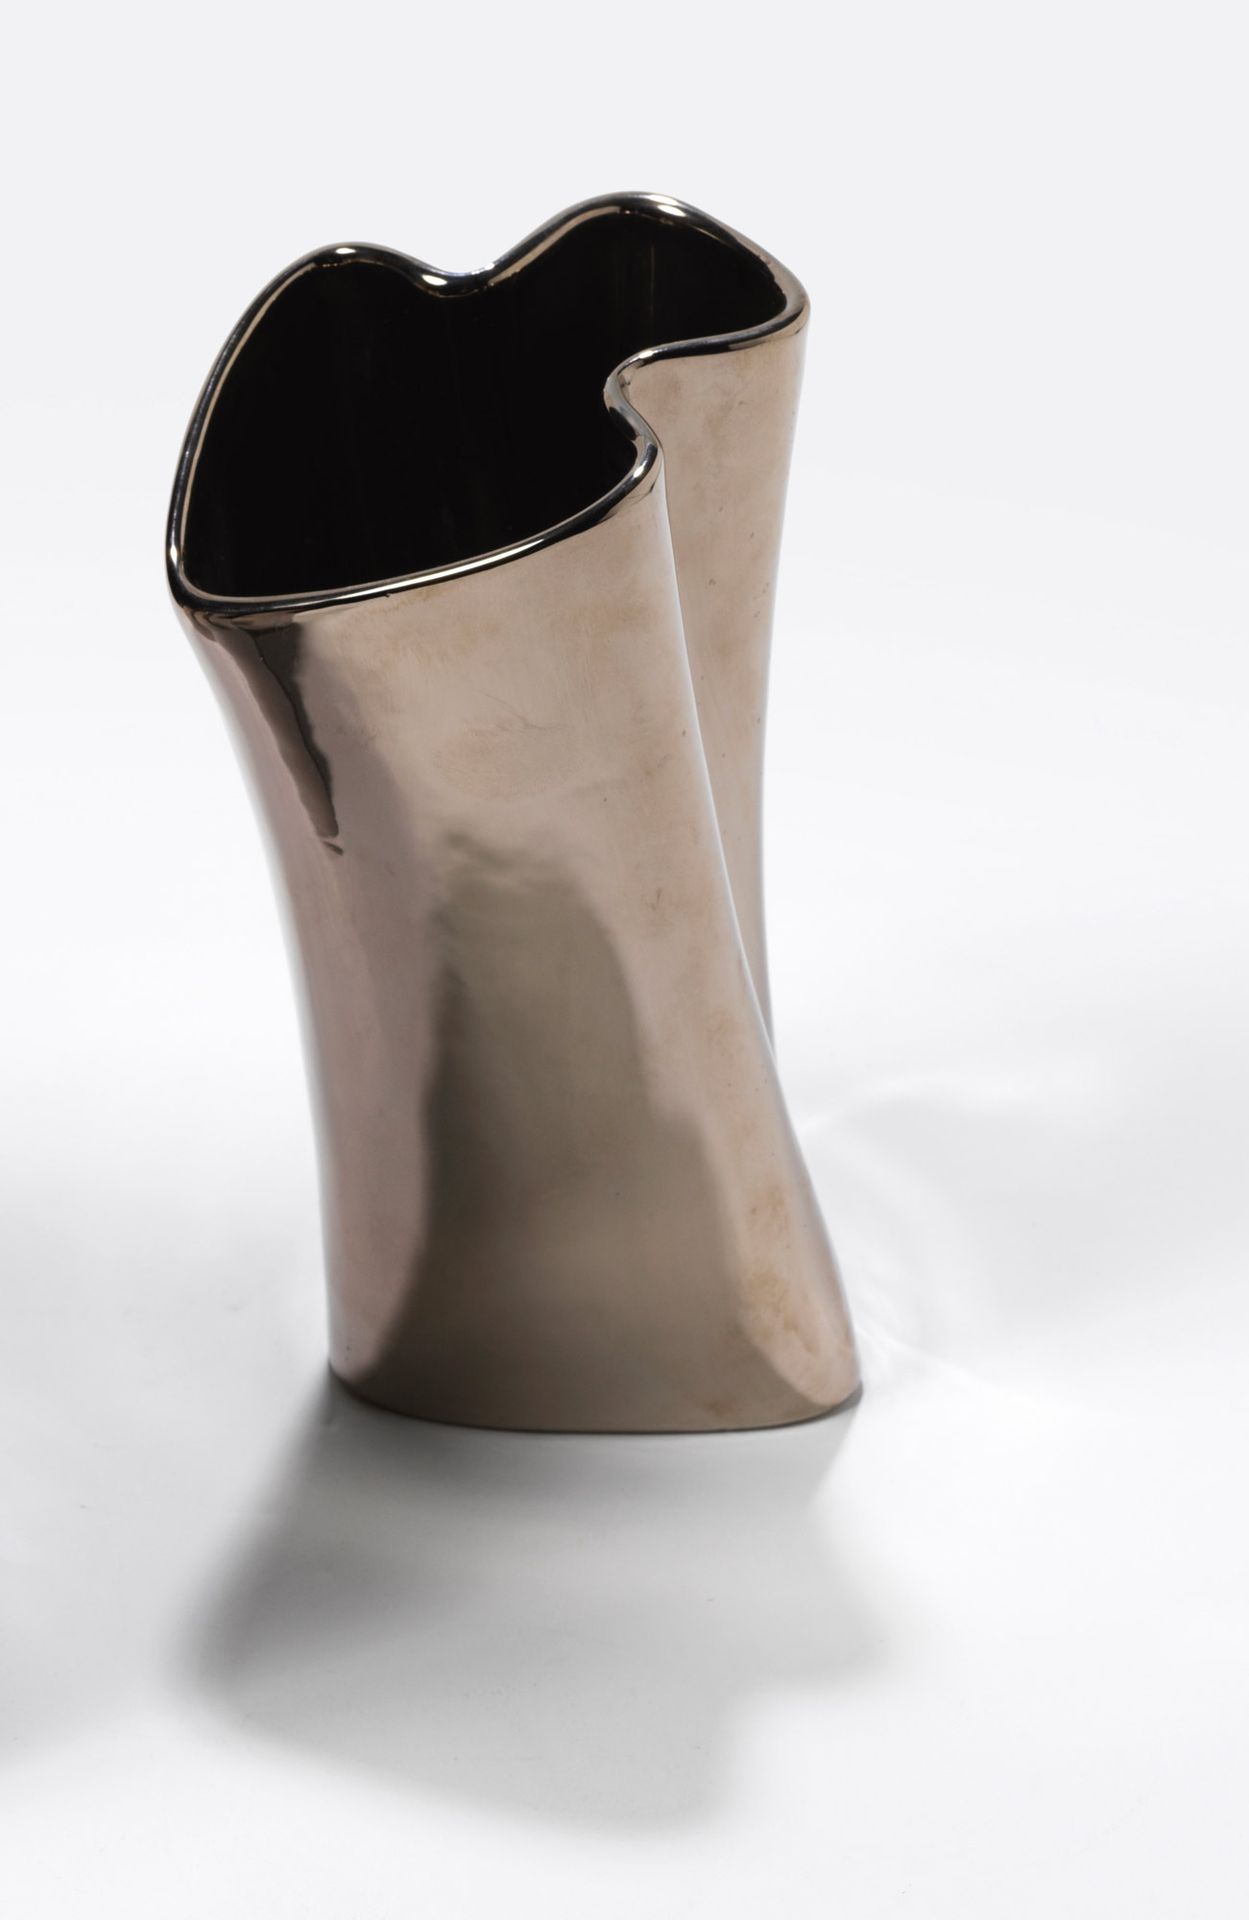 ANGELO MANGIAROTTI (1921-2012) Vase
Chrome plated ceramic

Signed A. Mangiarotti&hellip;